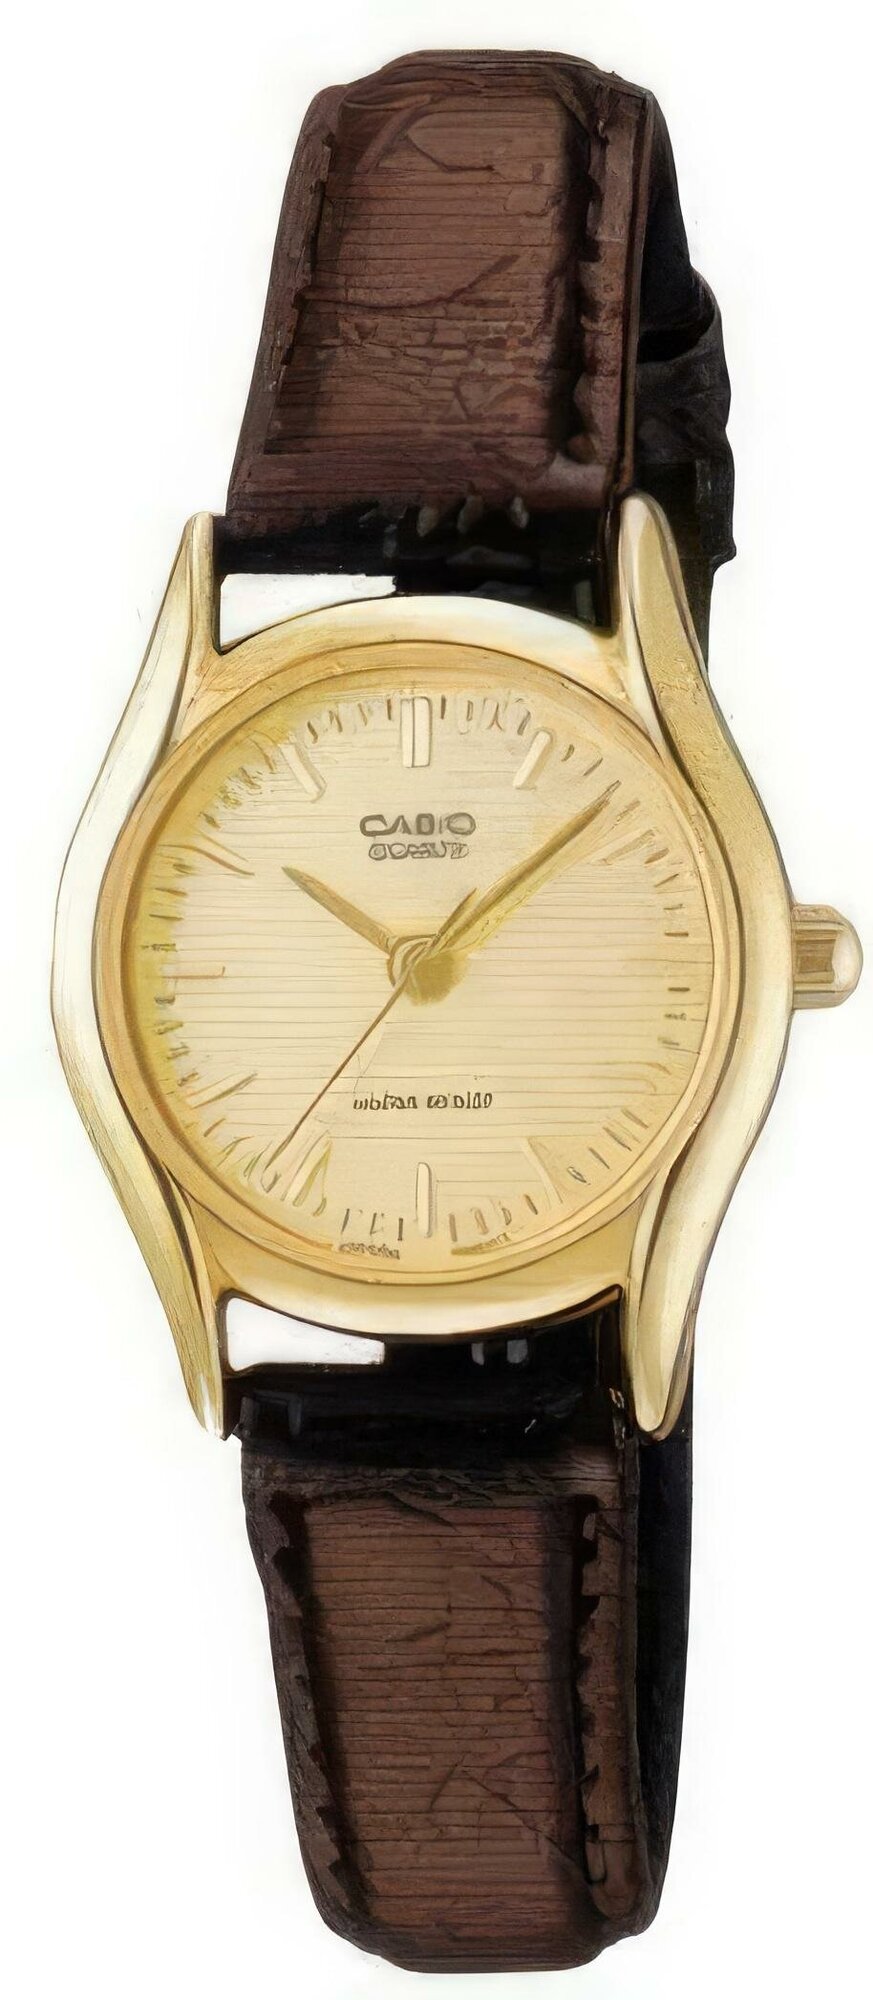 Наручные часы CASIO Collection LTP-1094Q-9A